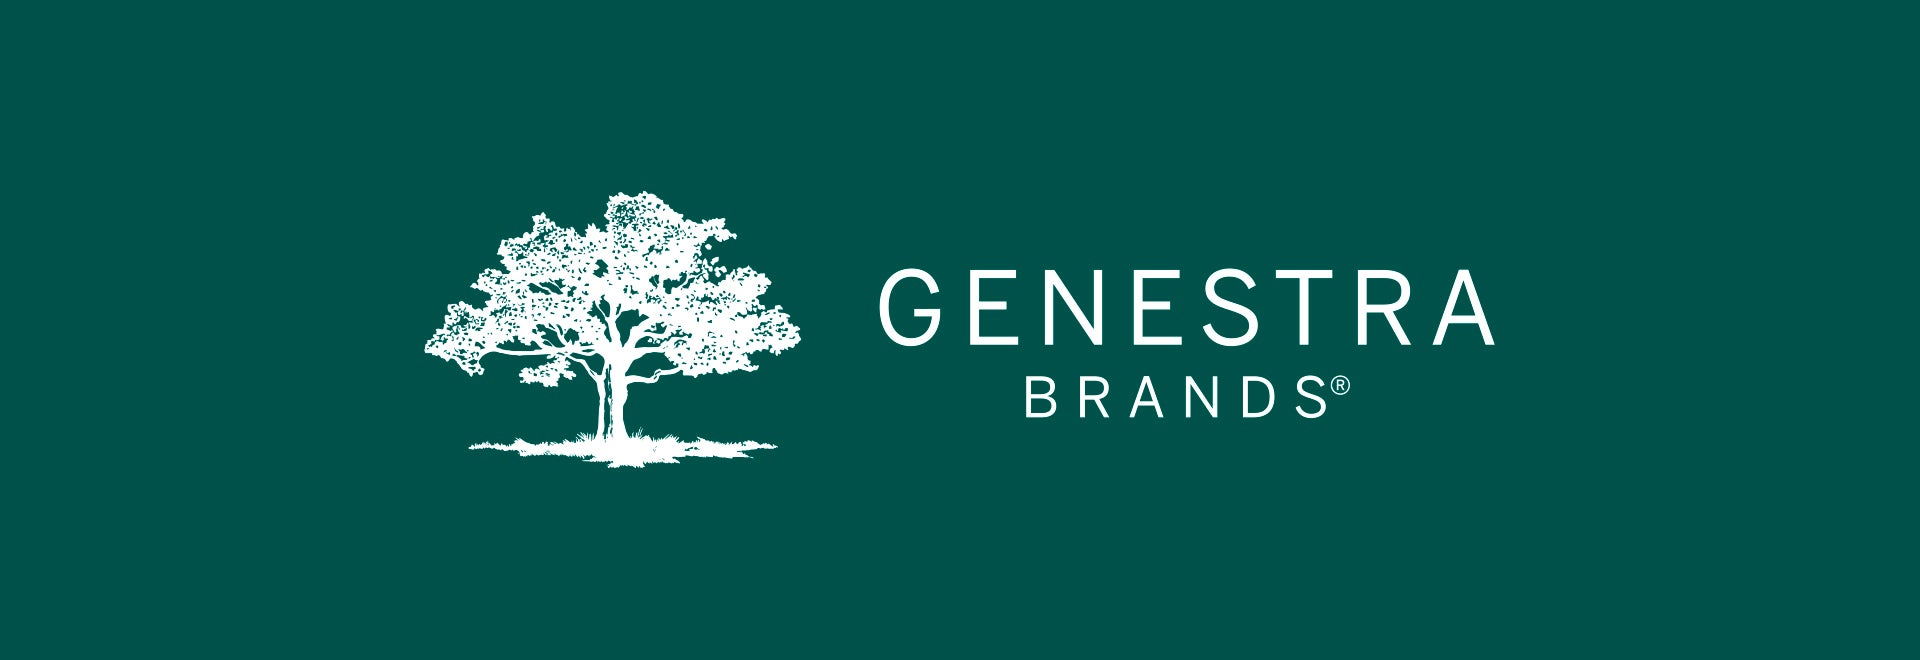 Genestra Brands logo